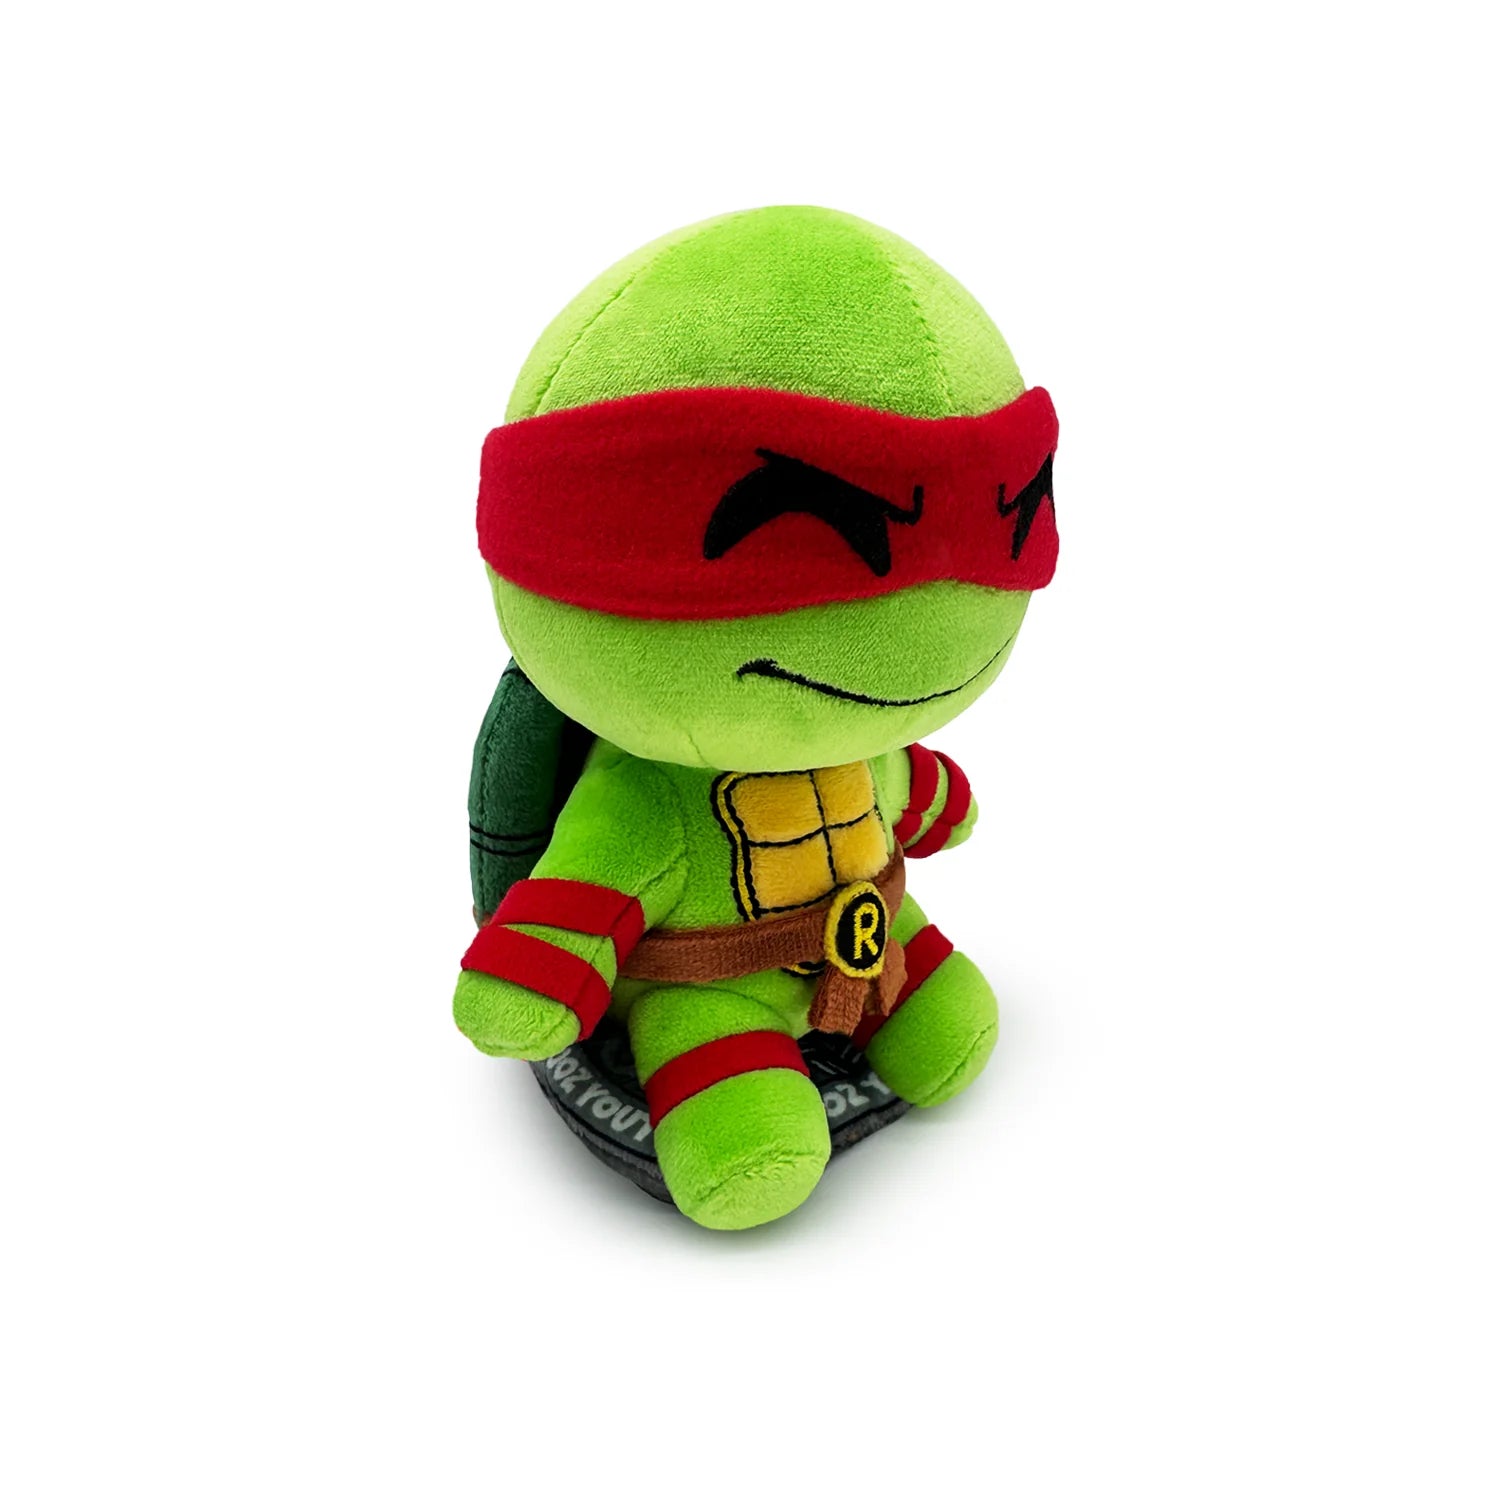 Youtooz Plush Shoulder Rider: TMNT Tortugas Ninja - Raphael Peluche 6 Pulgadas